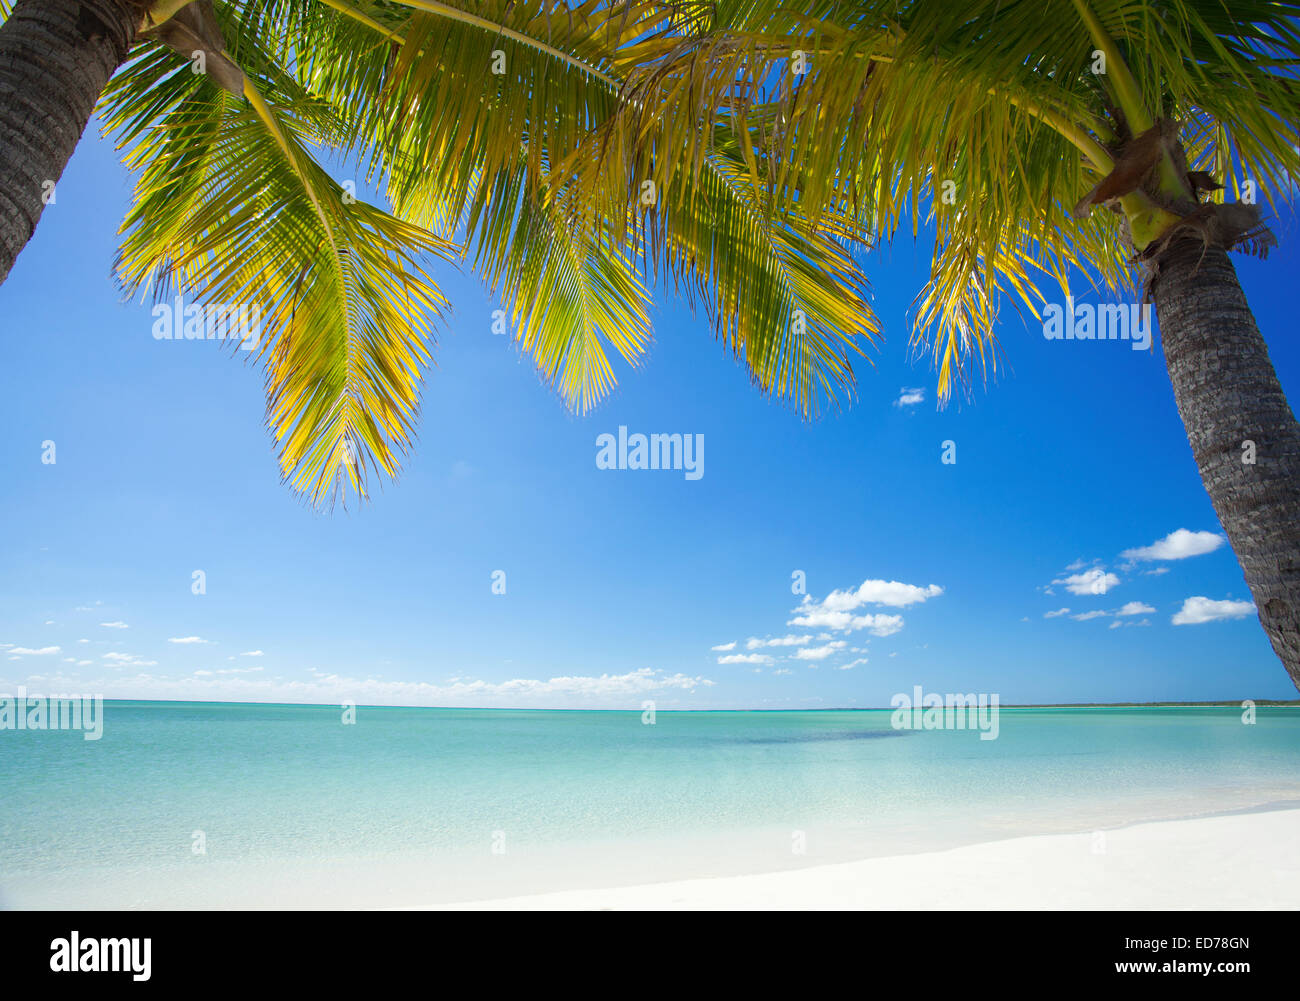 Palmen am tropischen Strand auf Abaco, Bahamas Stockfoto